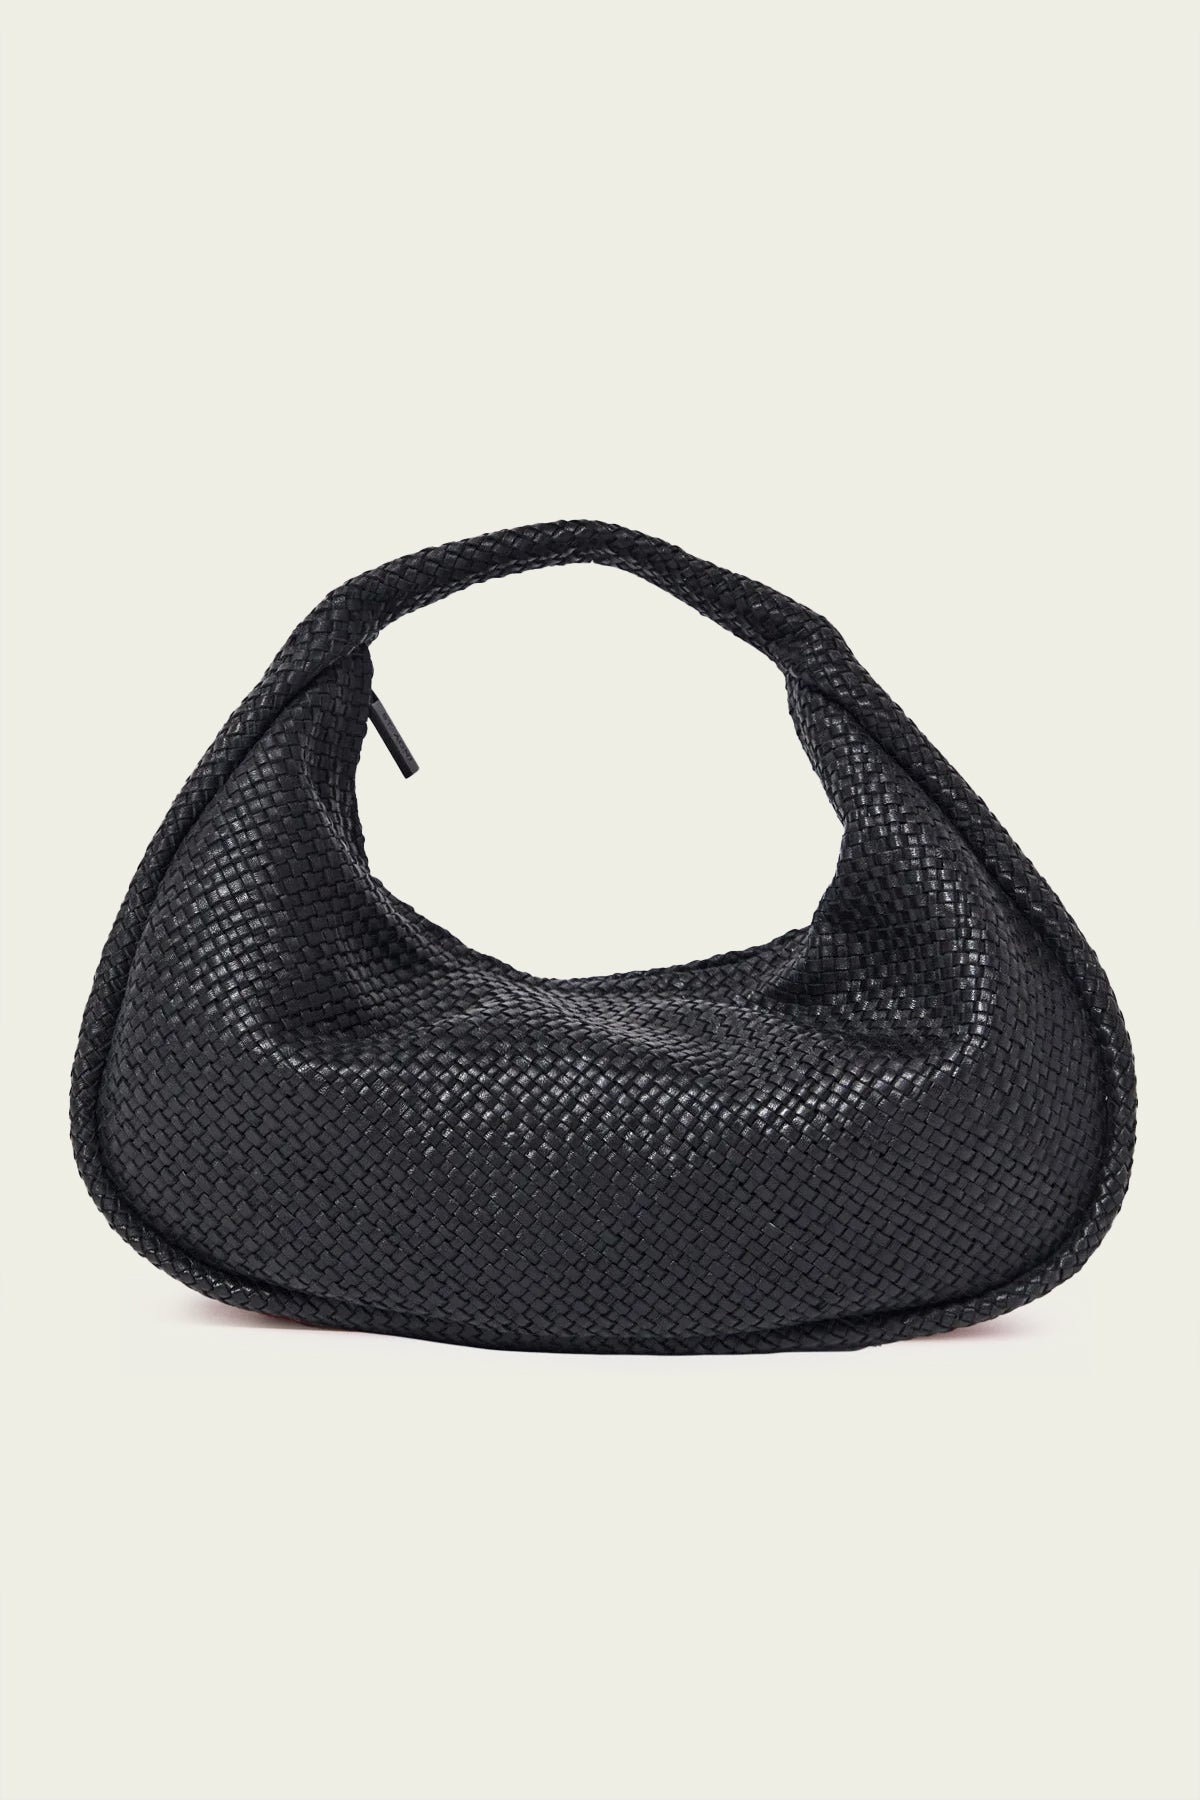 Woven Bon Bon Bag in Black - shop-olivia.com